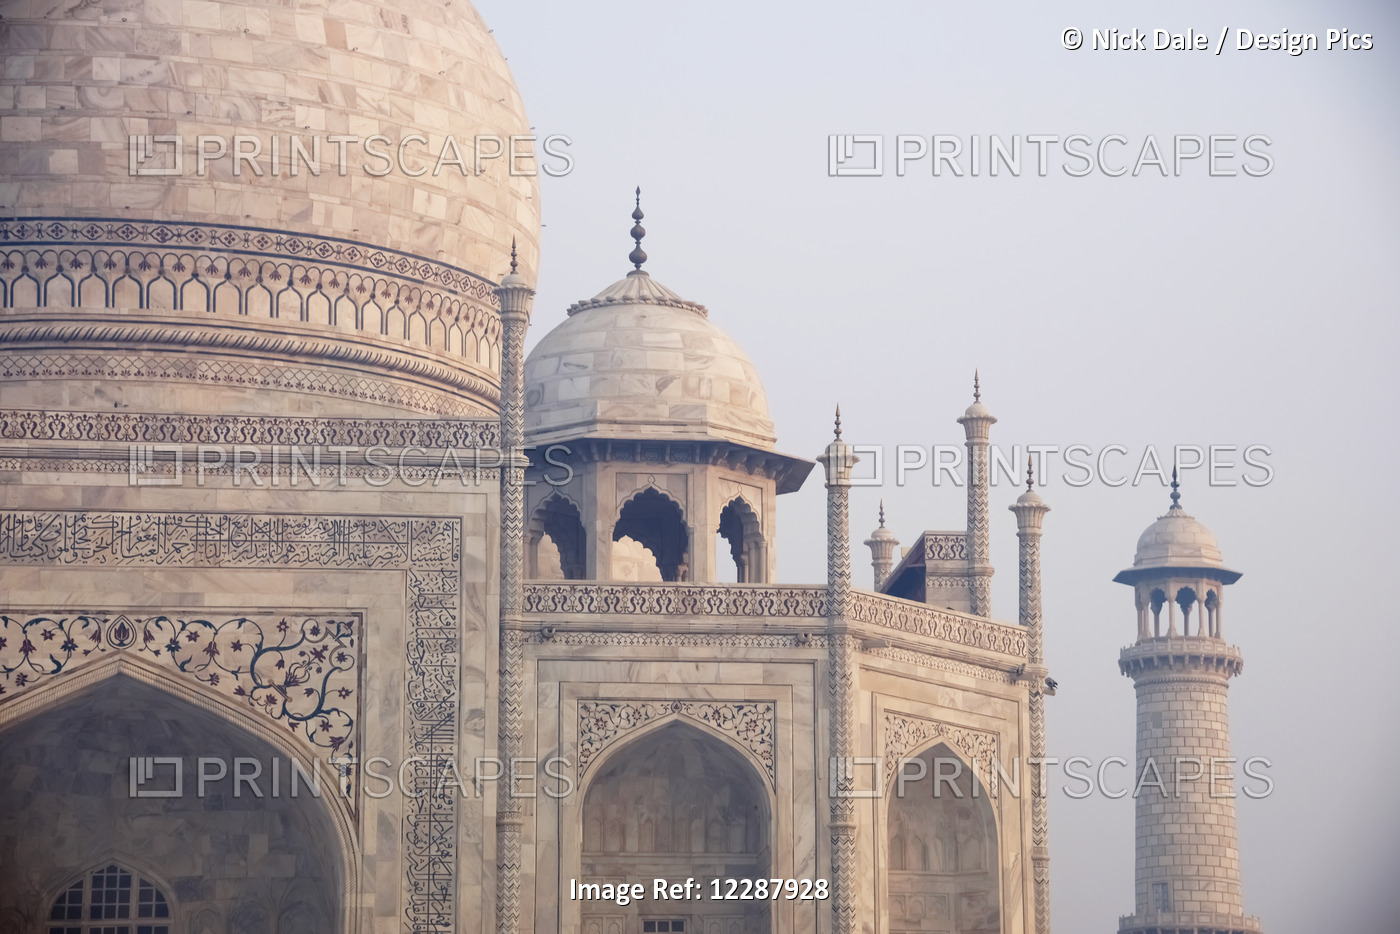 Taj Mahal Domes; Agra, Uttar Pradesh, India